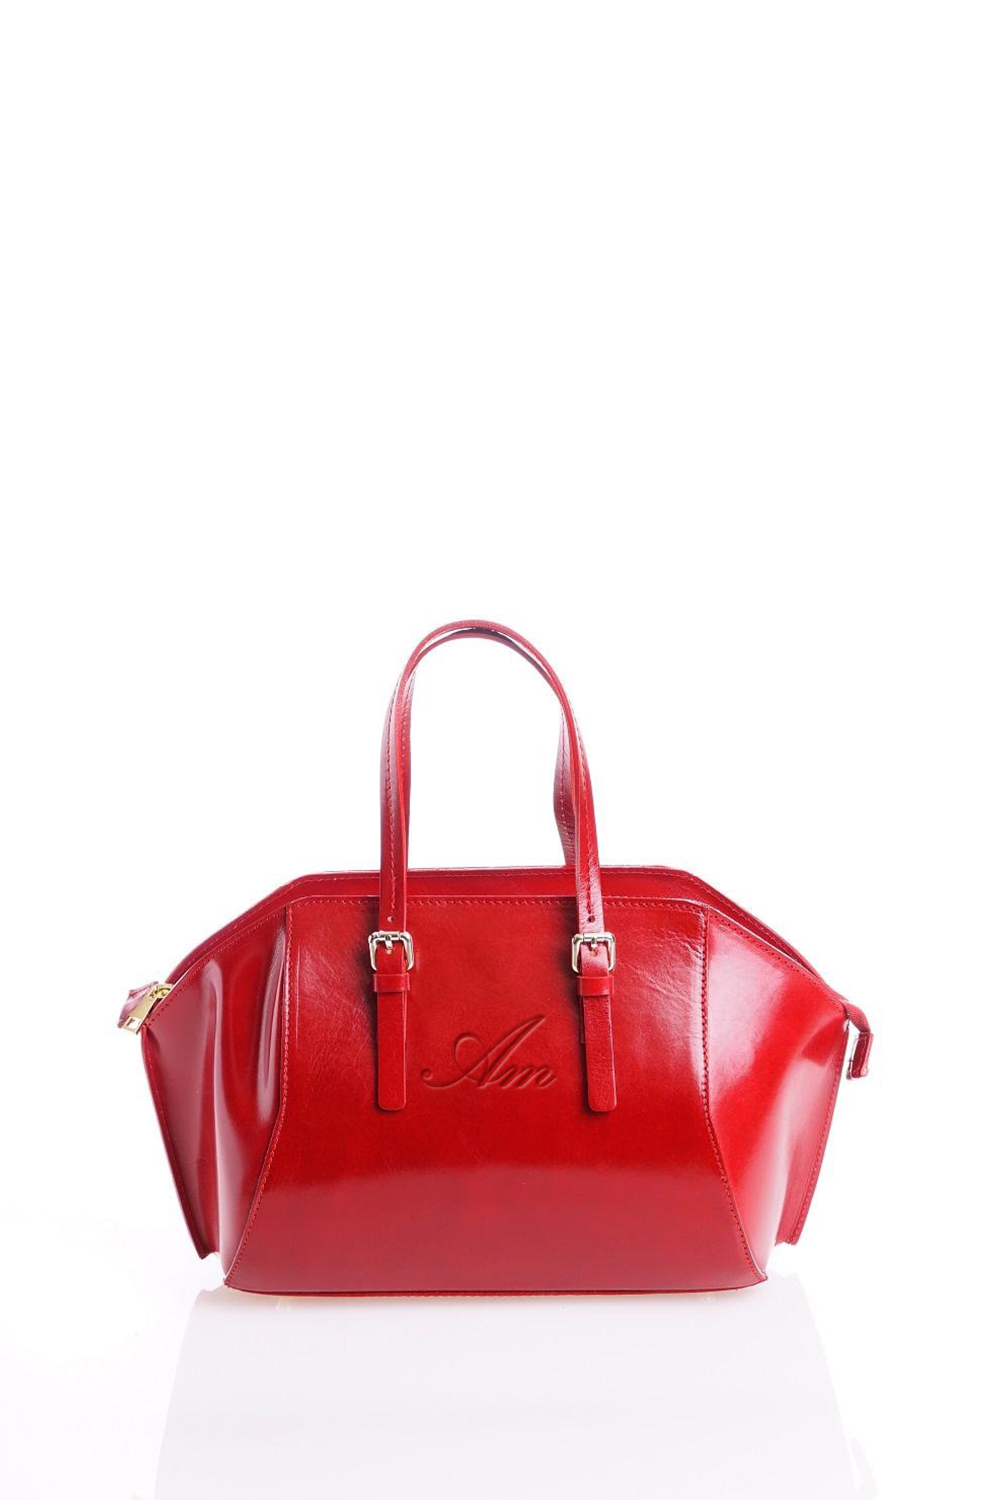 Alti Mora top luxury women handbag : Her X